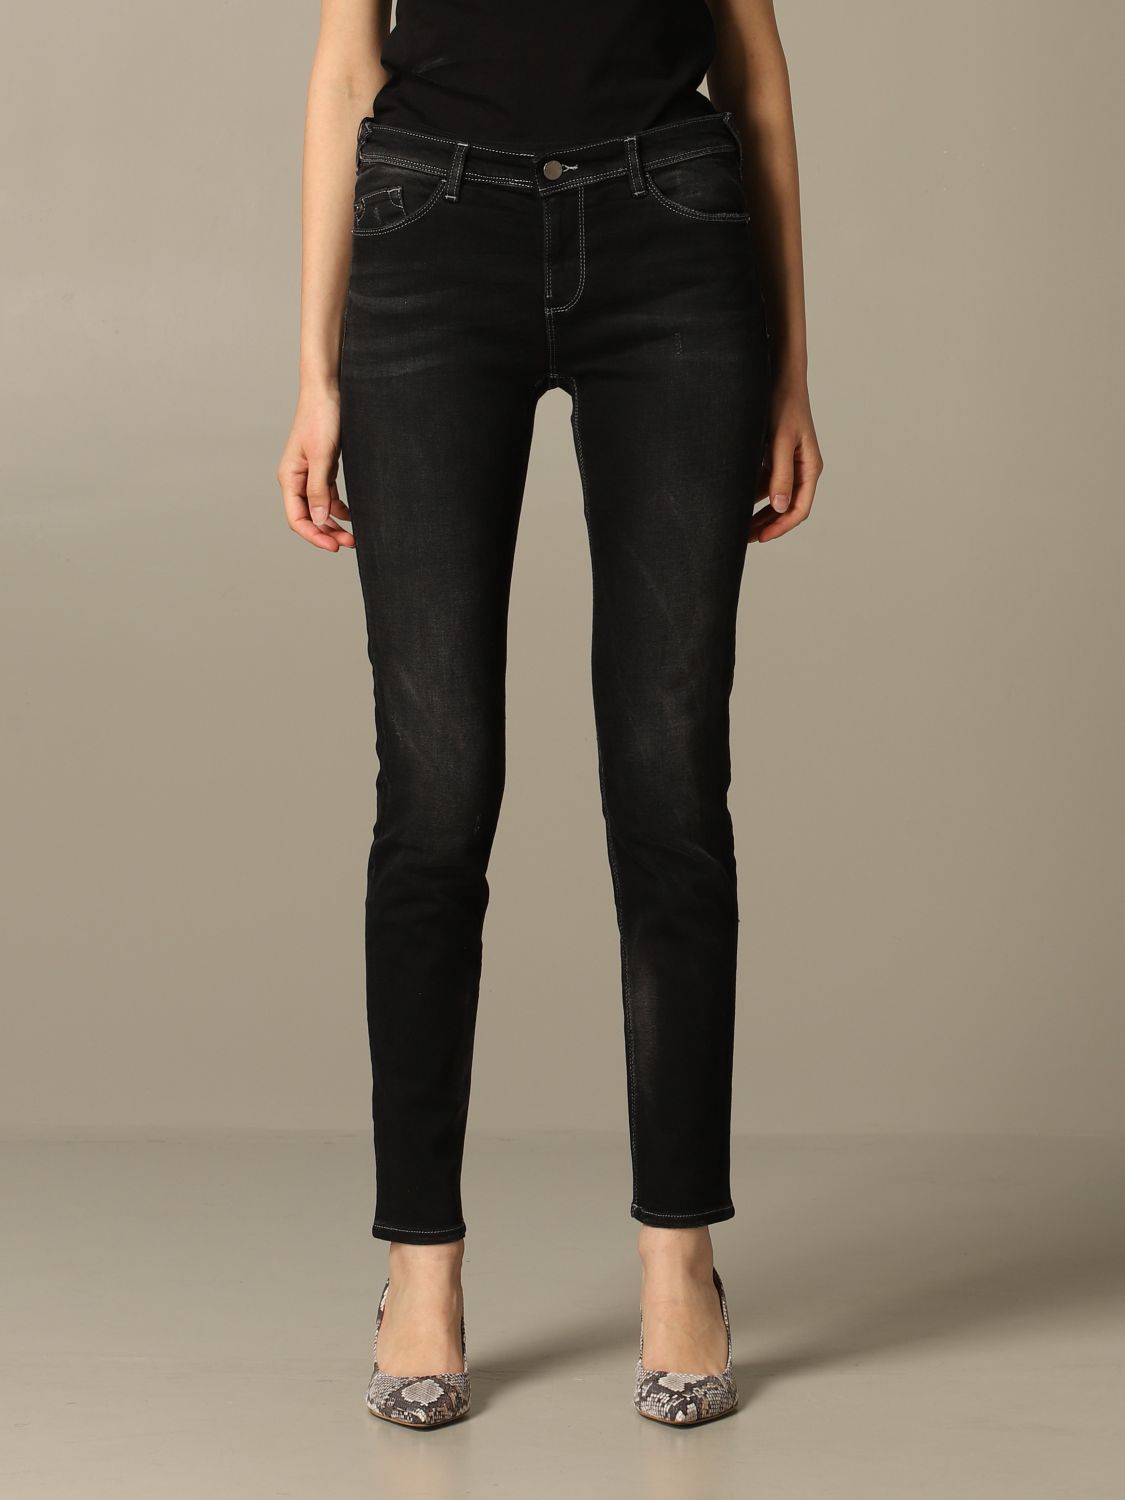 Emporio Armani jeans for woman Black | Emporio Armani jeans 3H2J28 2D2MZ online on GIGLIO.COM